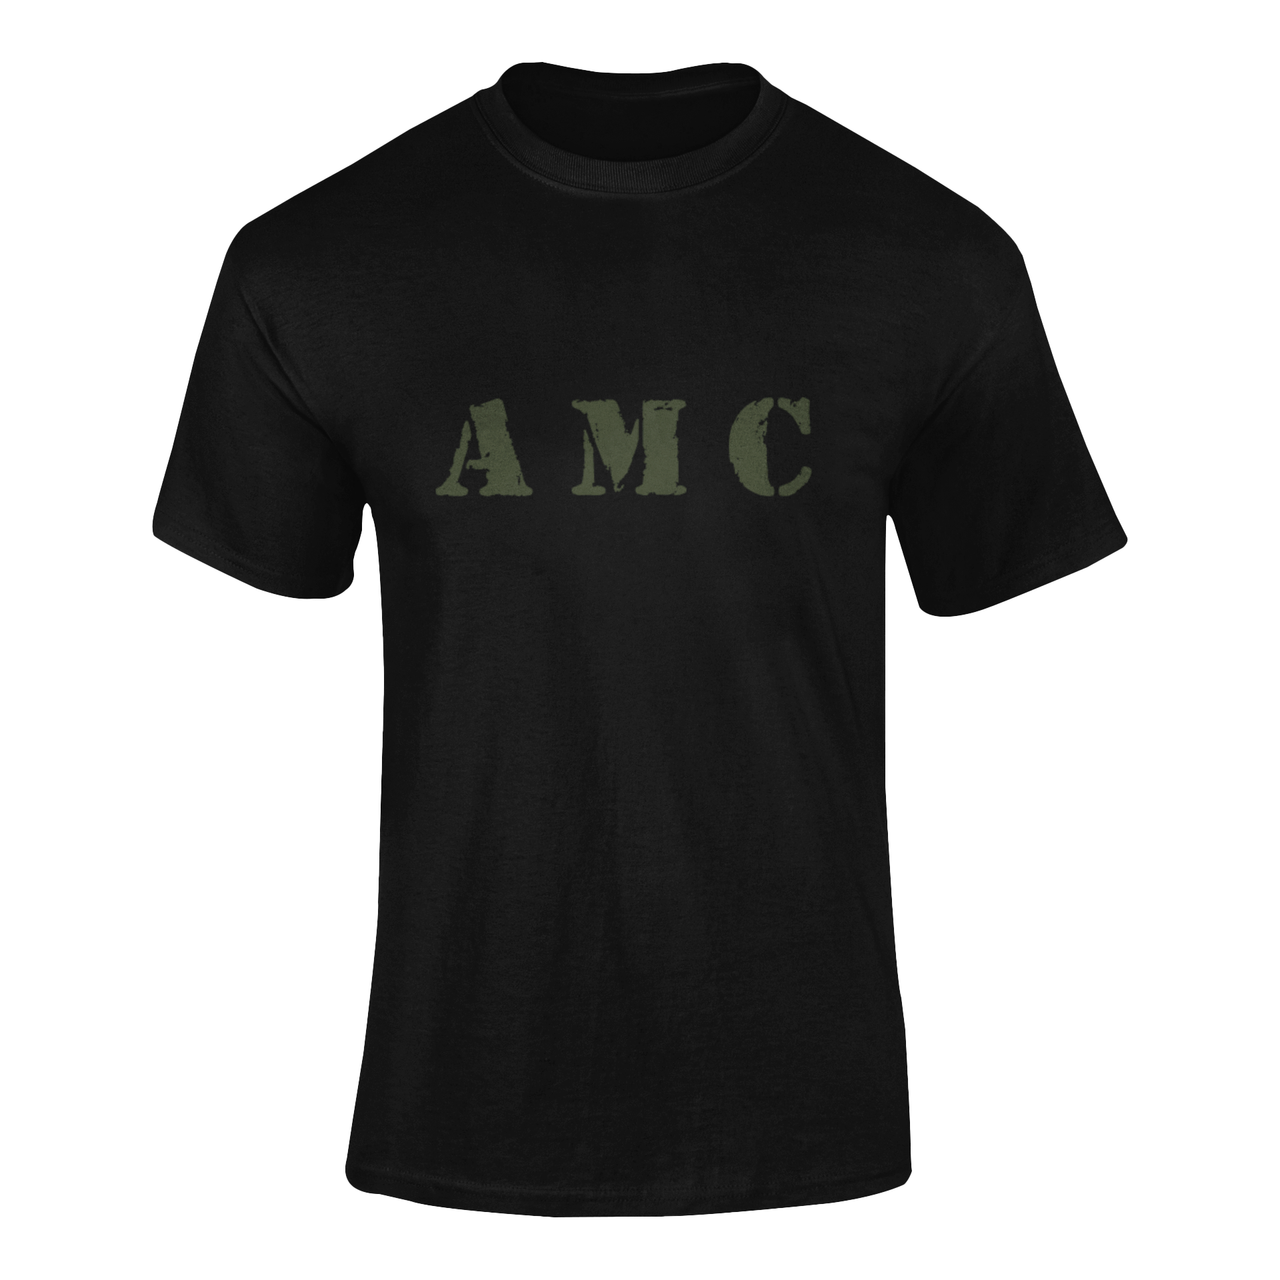 Military T-shirt - AMC (Men)